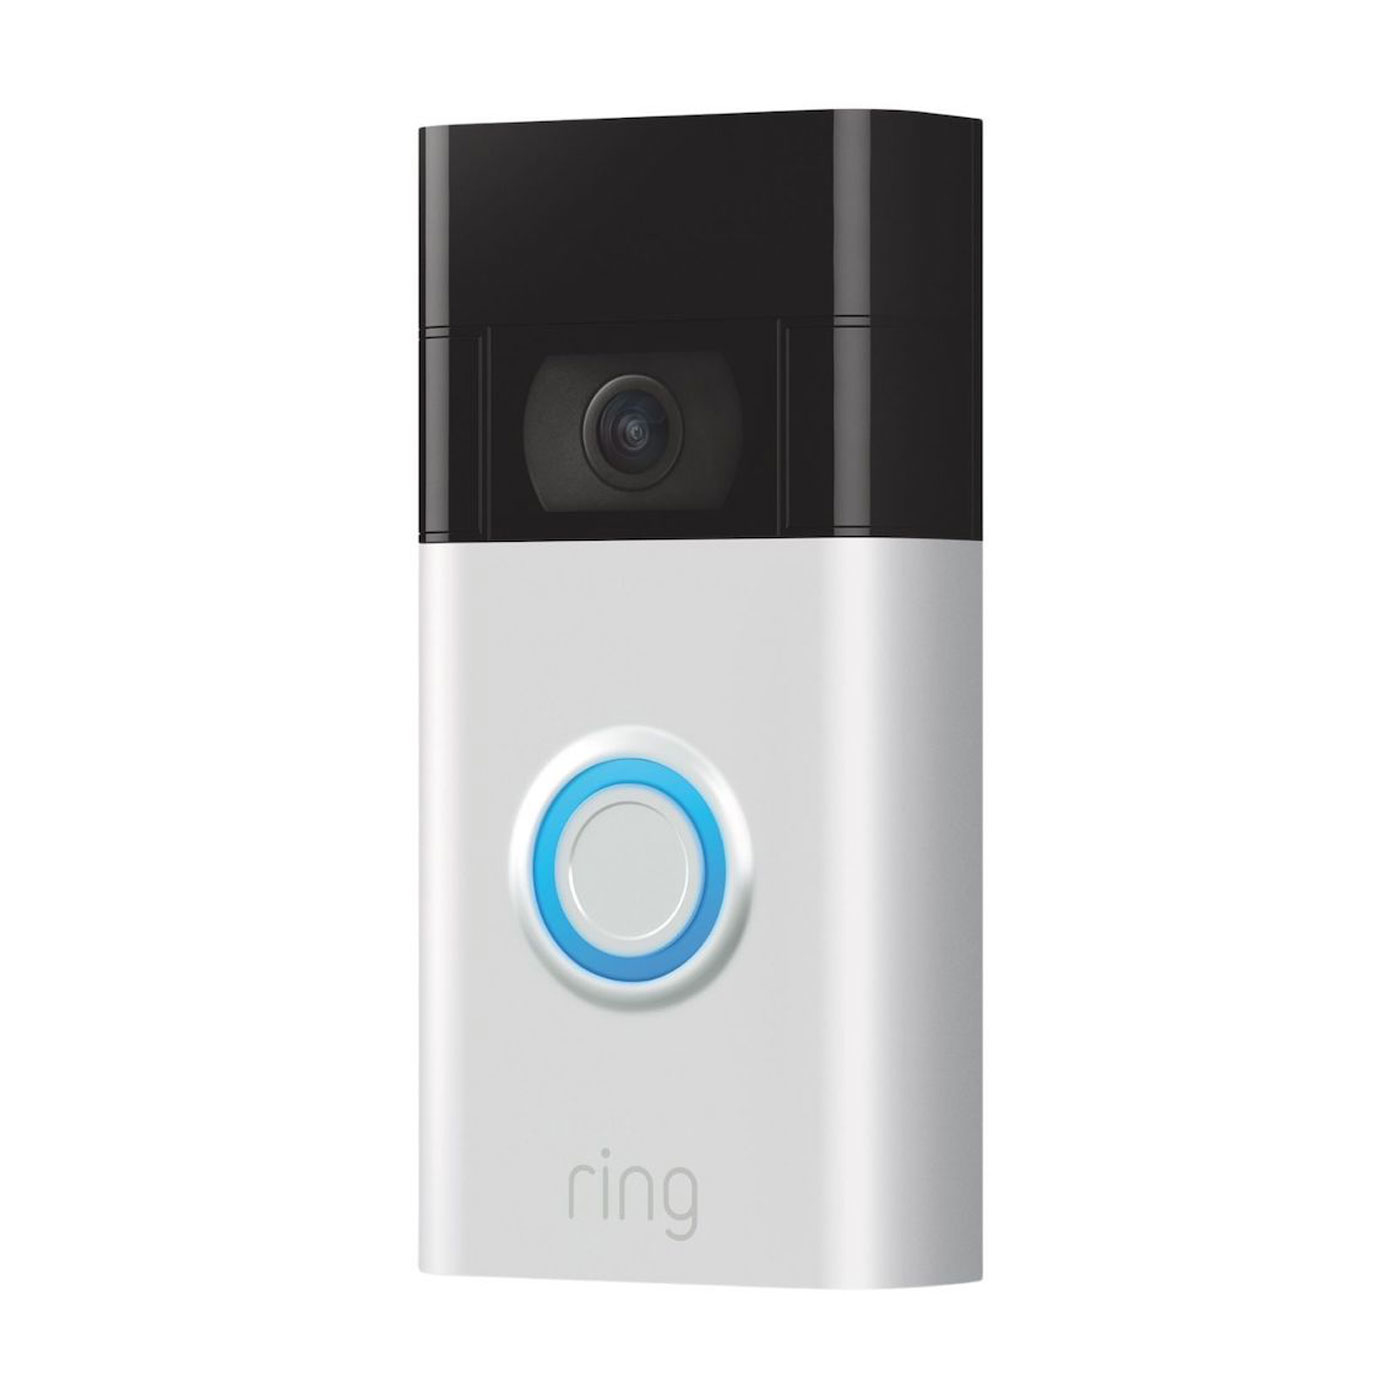 Video Portero con Cámara Integrada RING Inteligente WiFi Dia|Noche 1080p HD Doorbell 1 Plateado